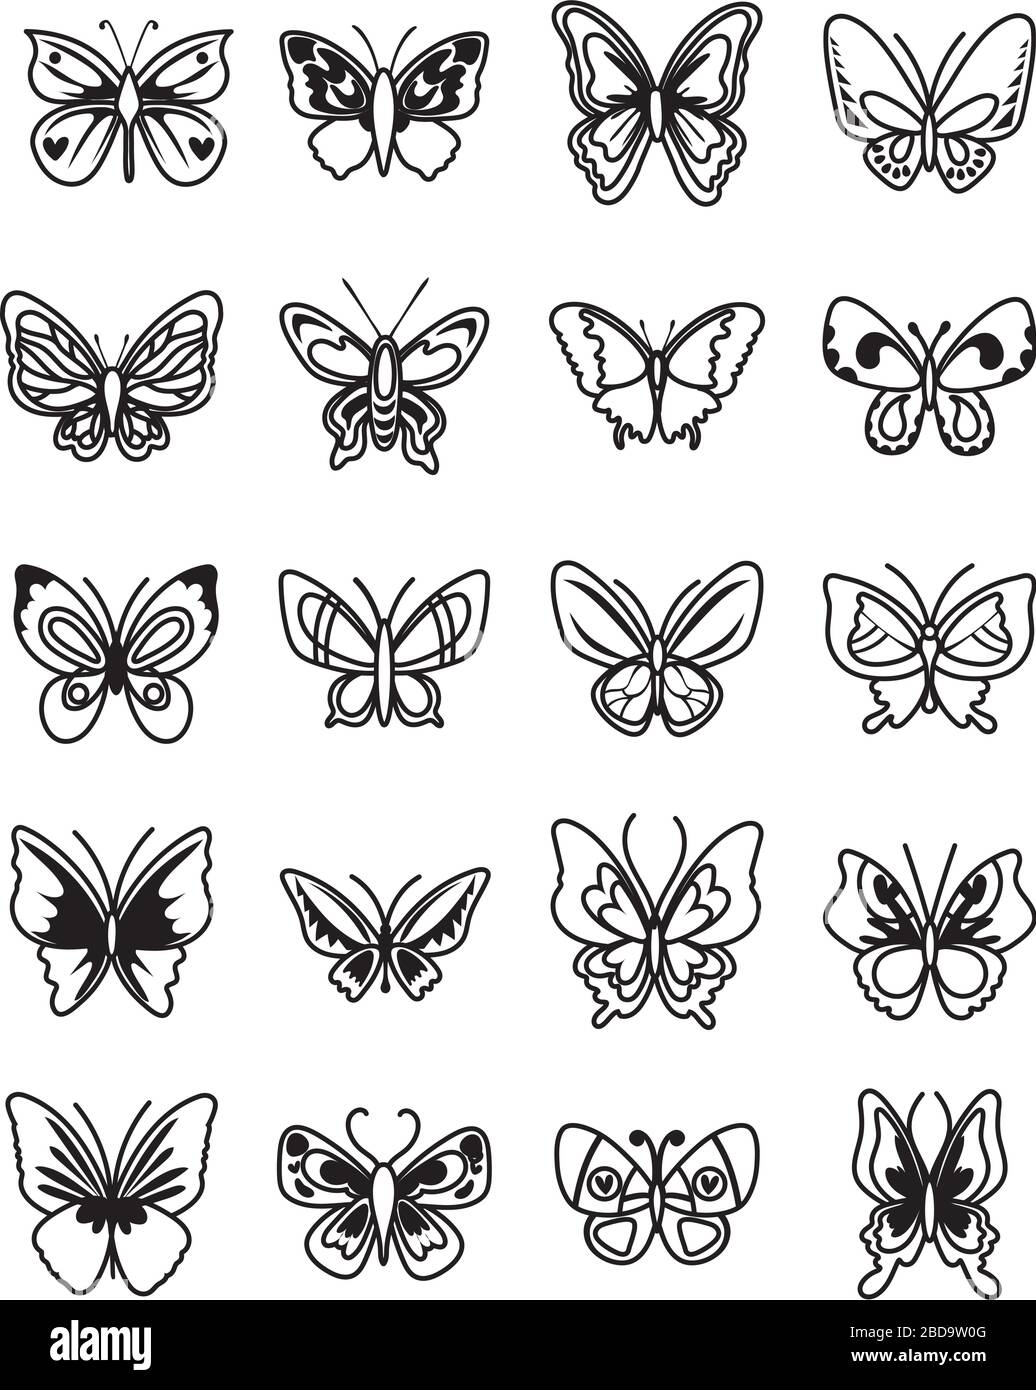 Peacock butterflies Stock Vector Images - Alamy